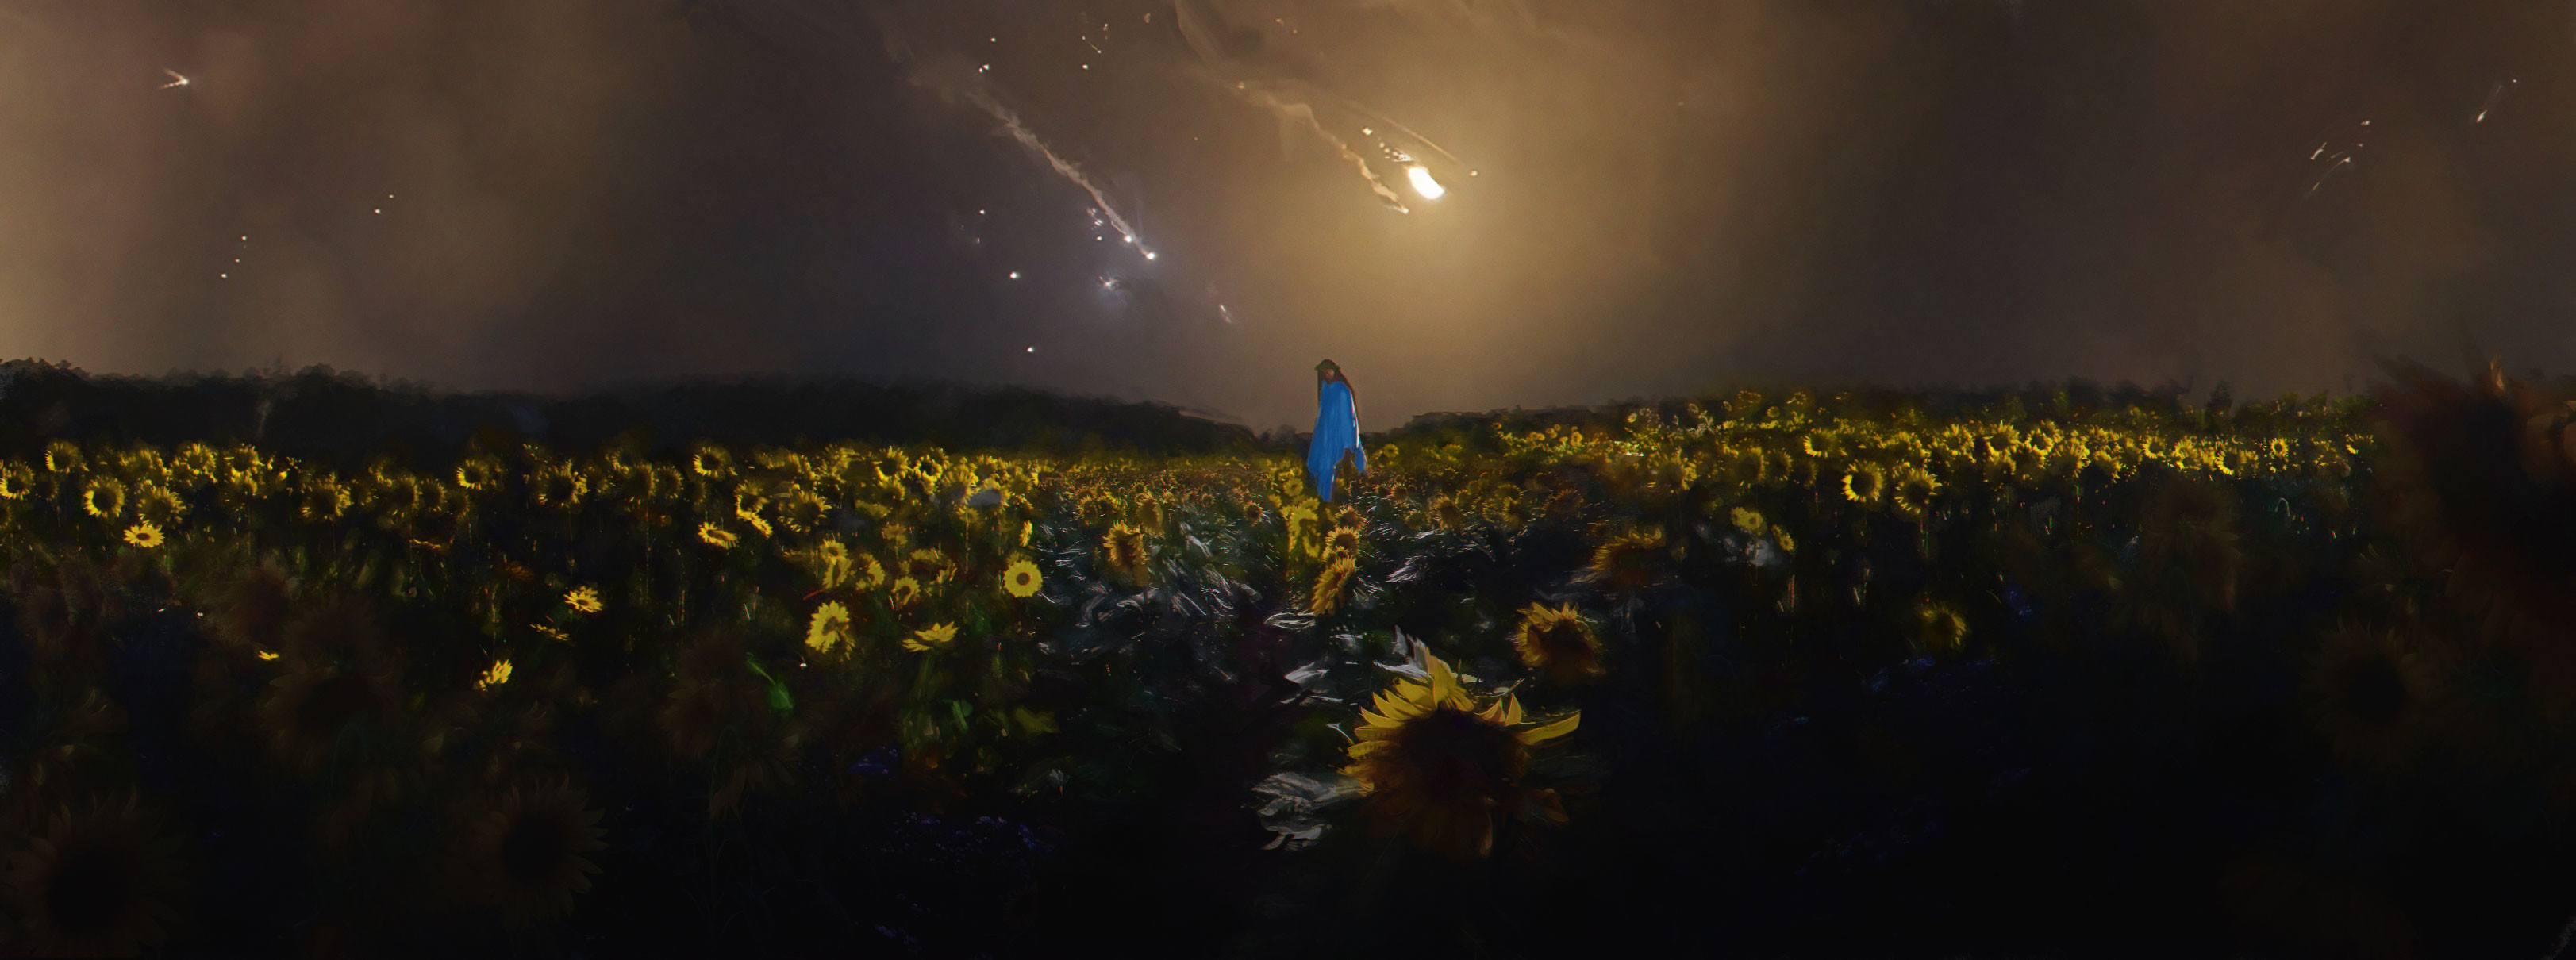 General 3246x1210 artwork digital art nature sunflowers shooting stars